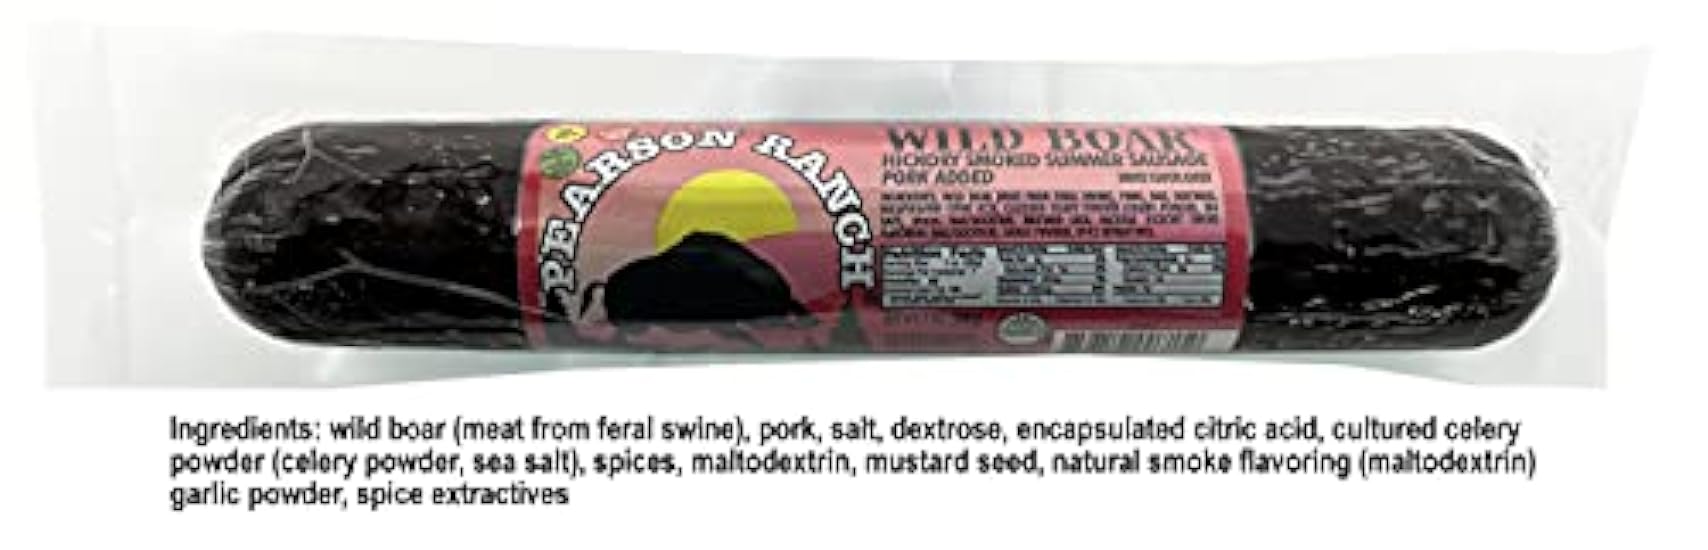 Pearson Ranch Game Meat Summer Sausage Variety Pack of 5 – Elk, Buffalo, Venison, Wild Boar, & Fender Blend (rabbit, alligator, venison, elk, buffalo, beef, pork, & wild boar) Exotic Meat Summer Sausage Pack, Gluten-Free, MSG-Free 826651270